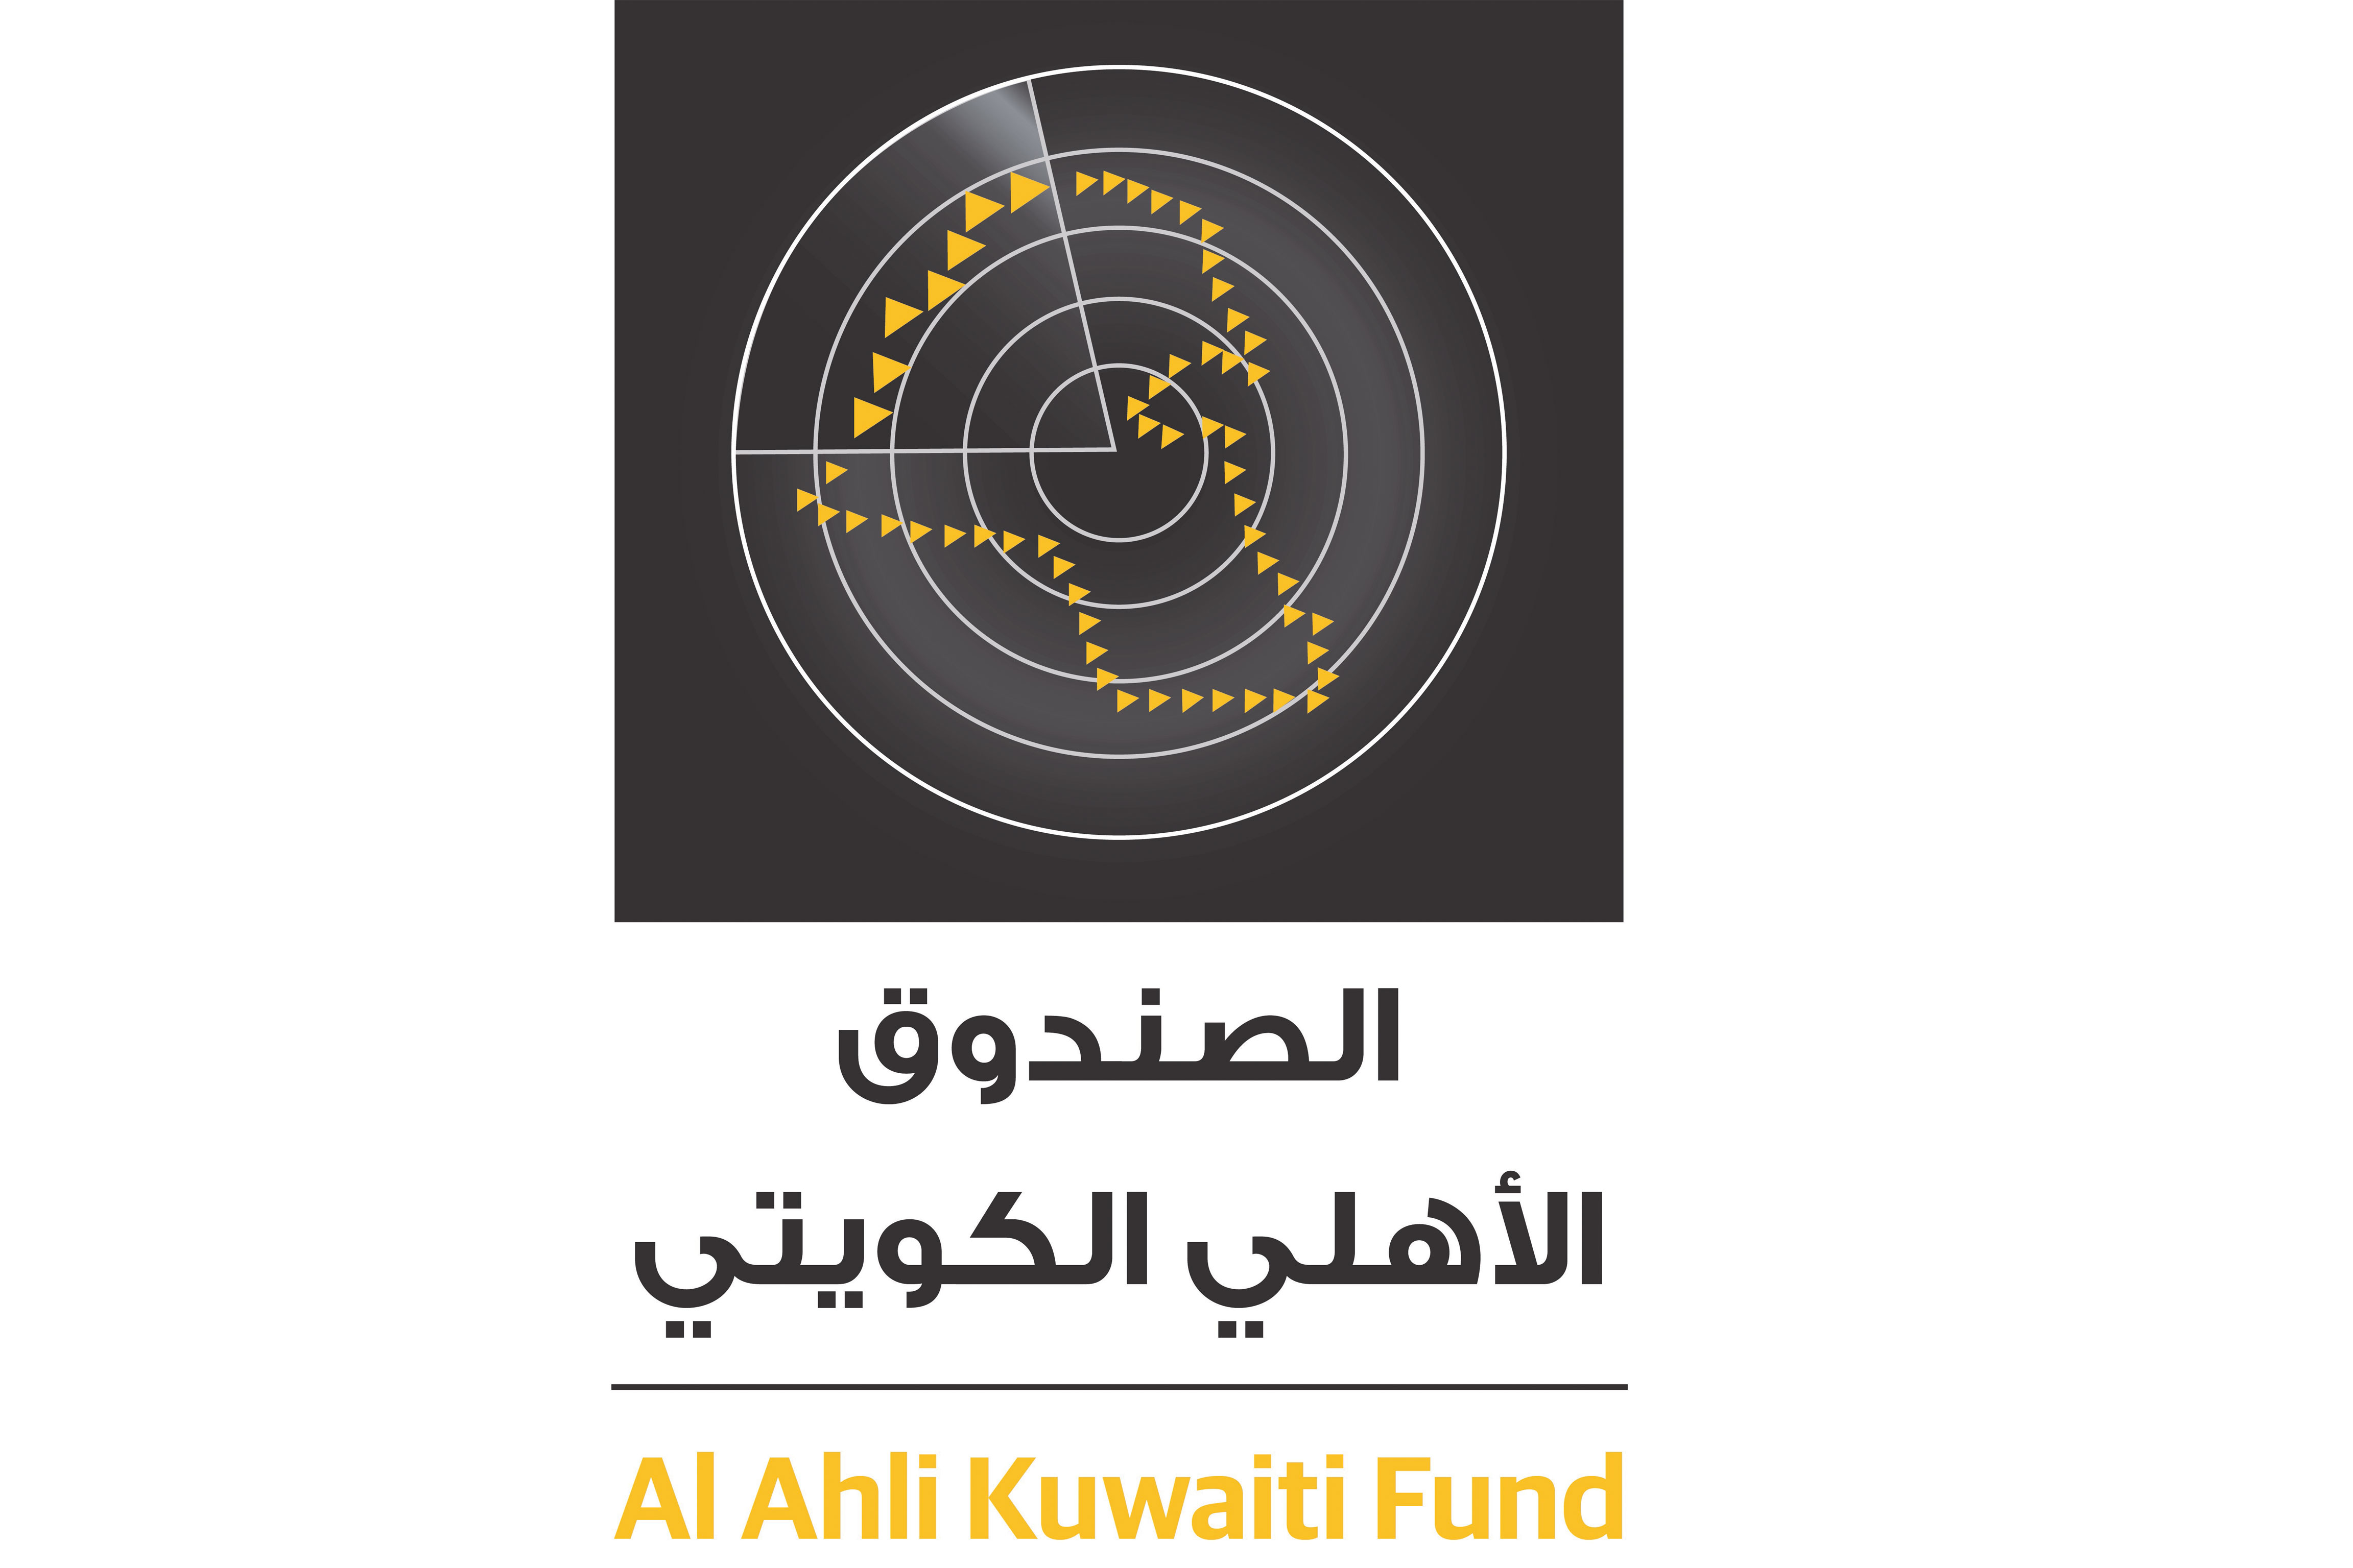 Notification to Al Ahli Kuwaiti Fund unit holders